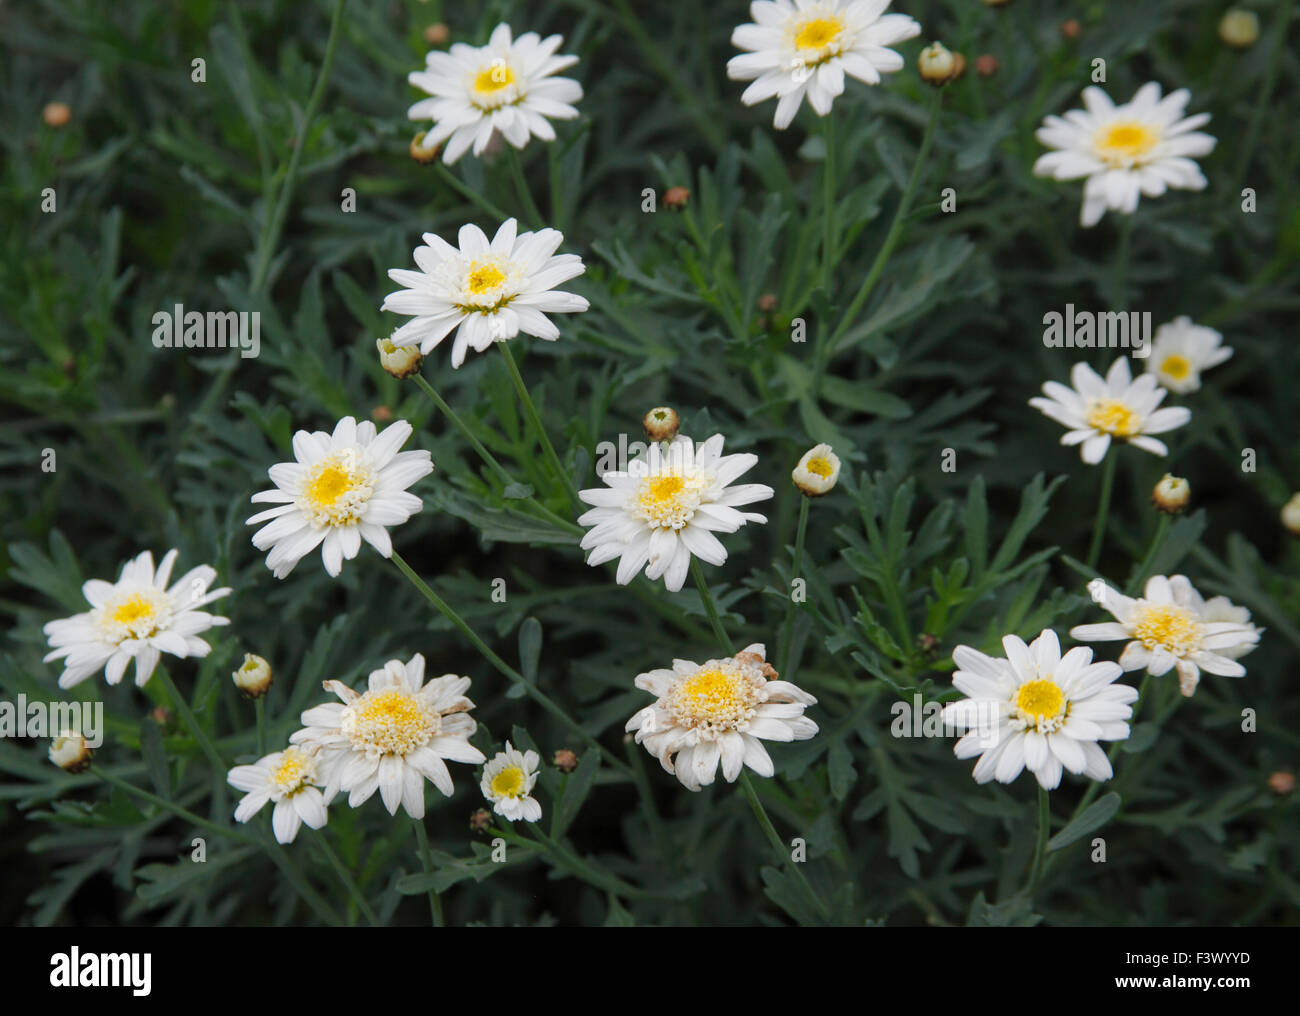 Agryanthemum frutescens Molimba XL Duplo White 'Argydowitis' plant in flower Stock Photo